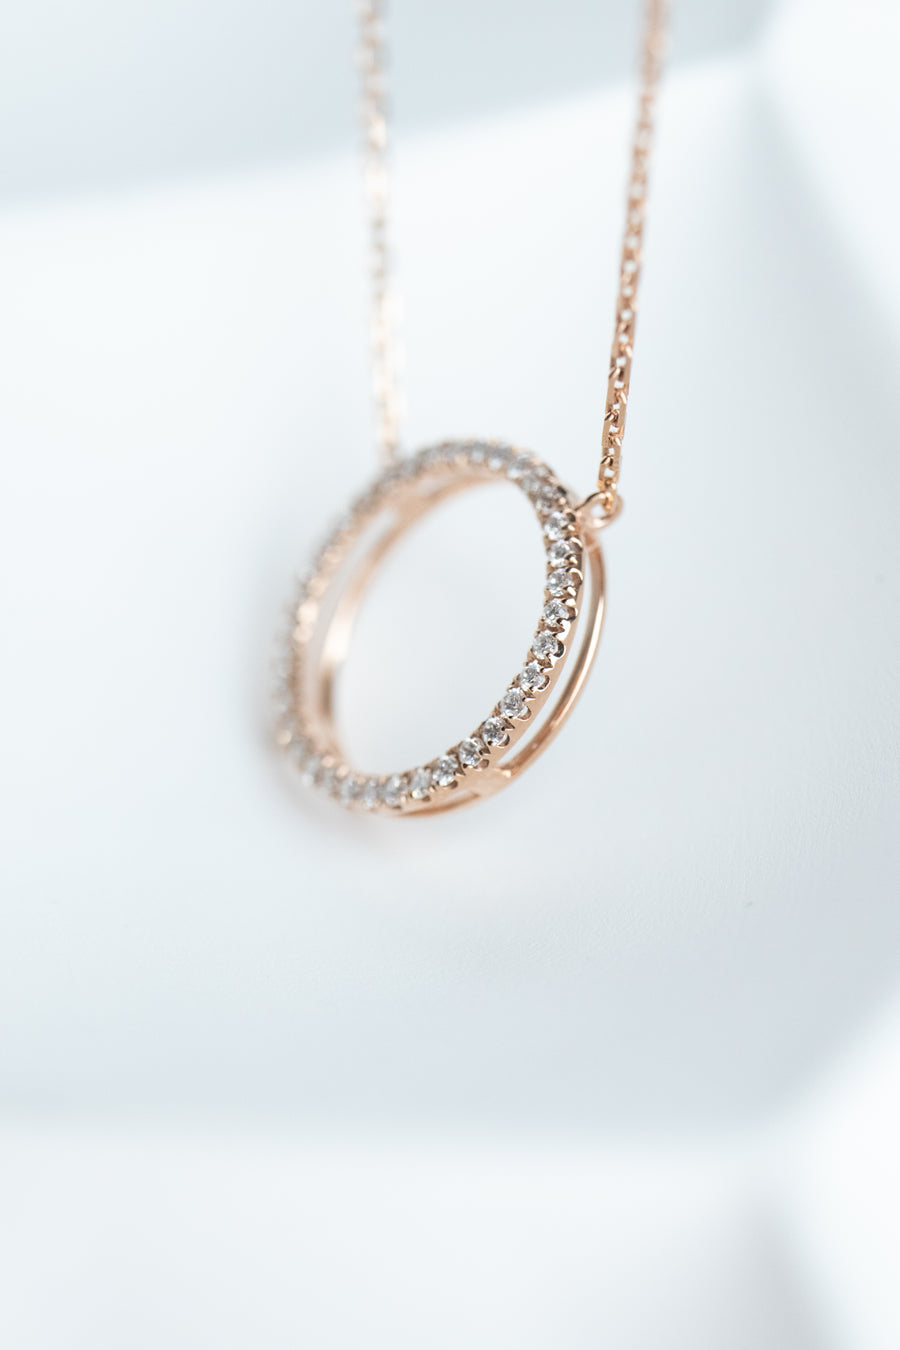 (Preorder) Round Brilliant White Diamonds 14K/18K Gold Perfection Circle Necklace